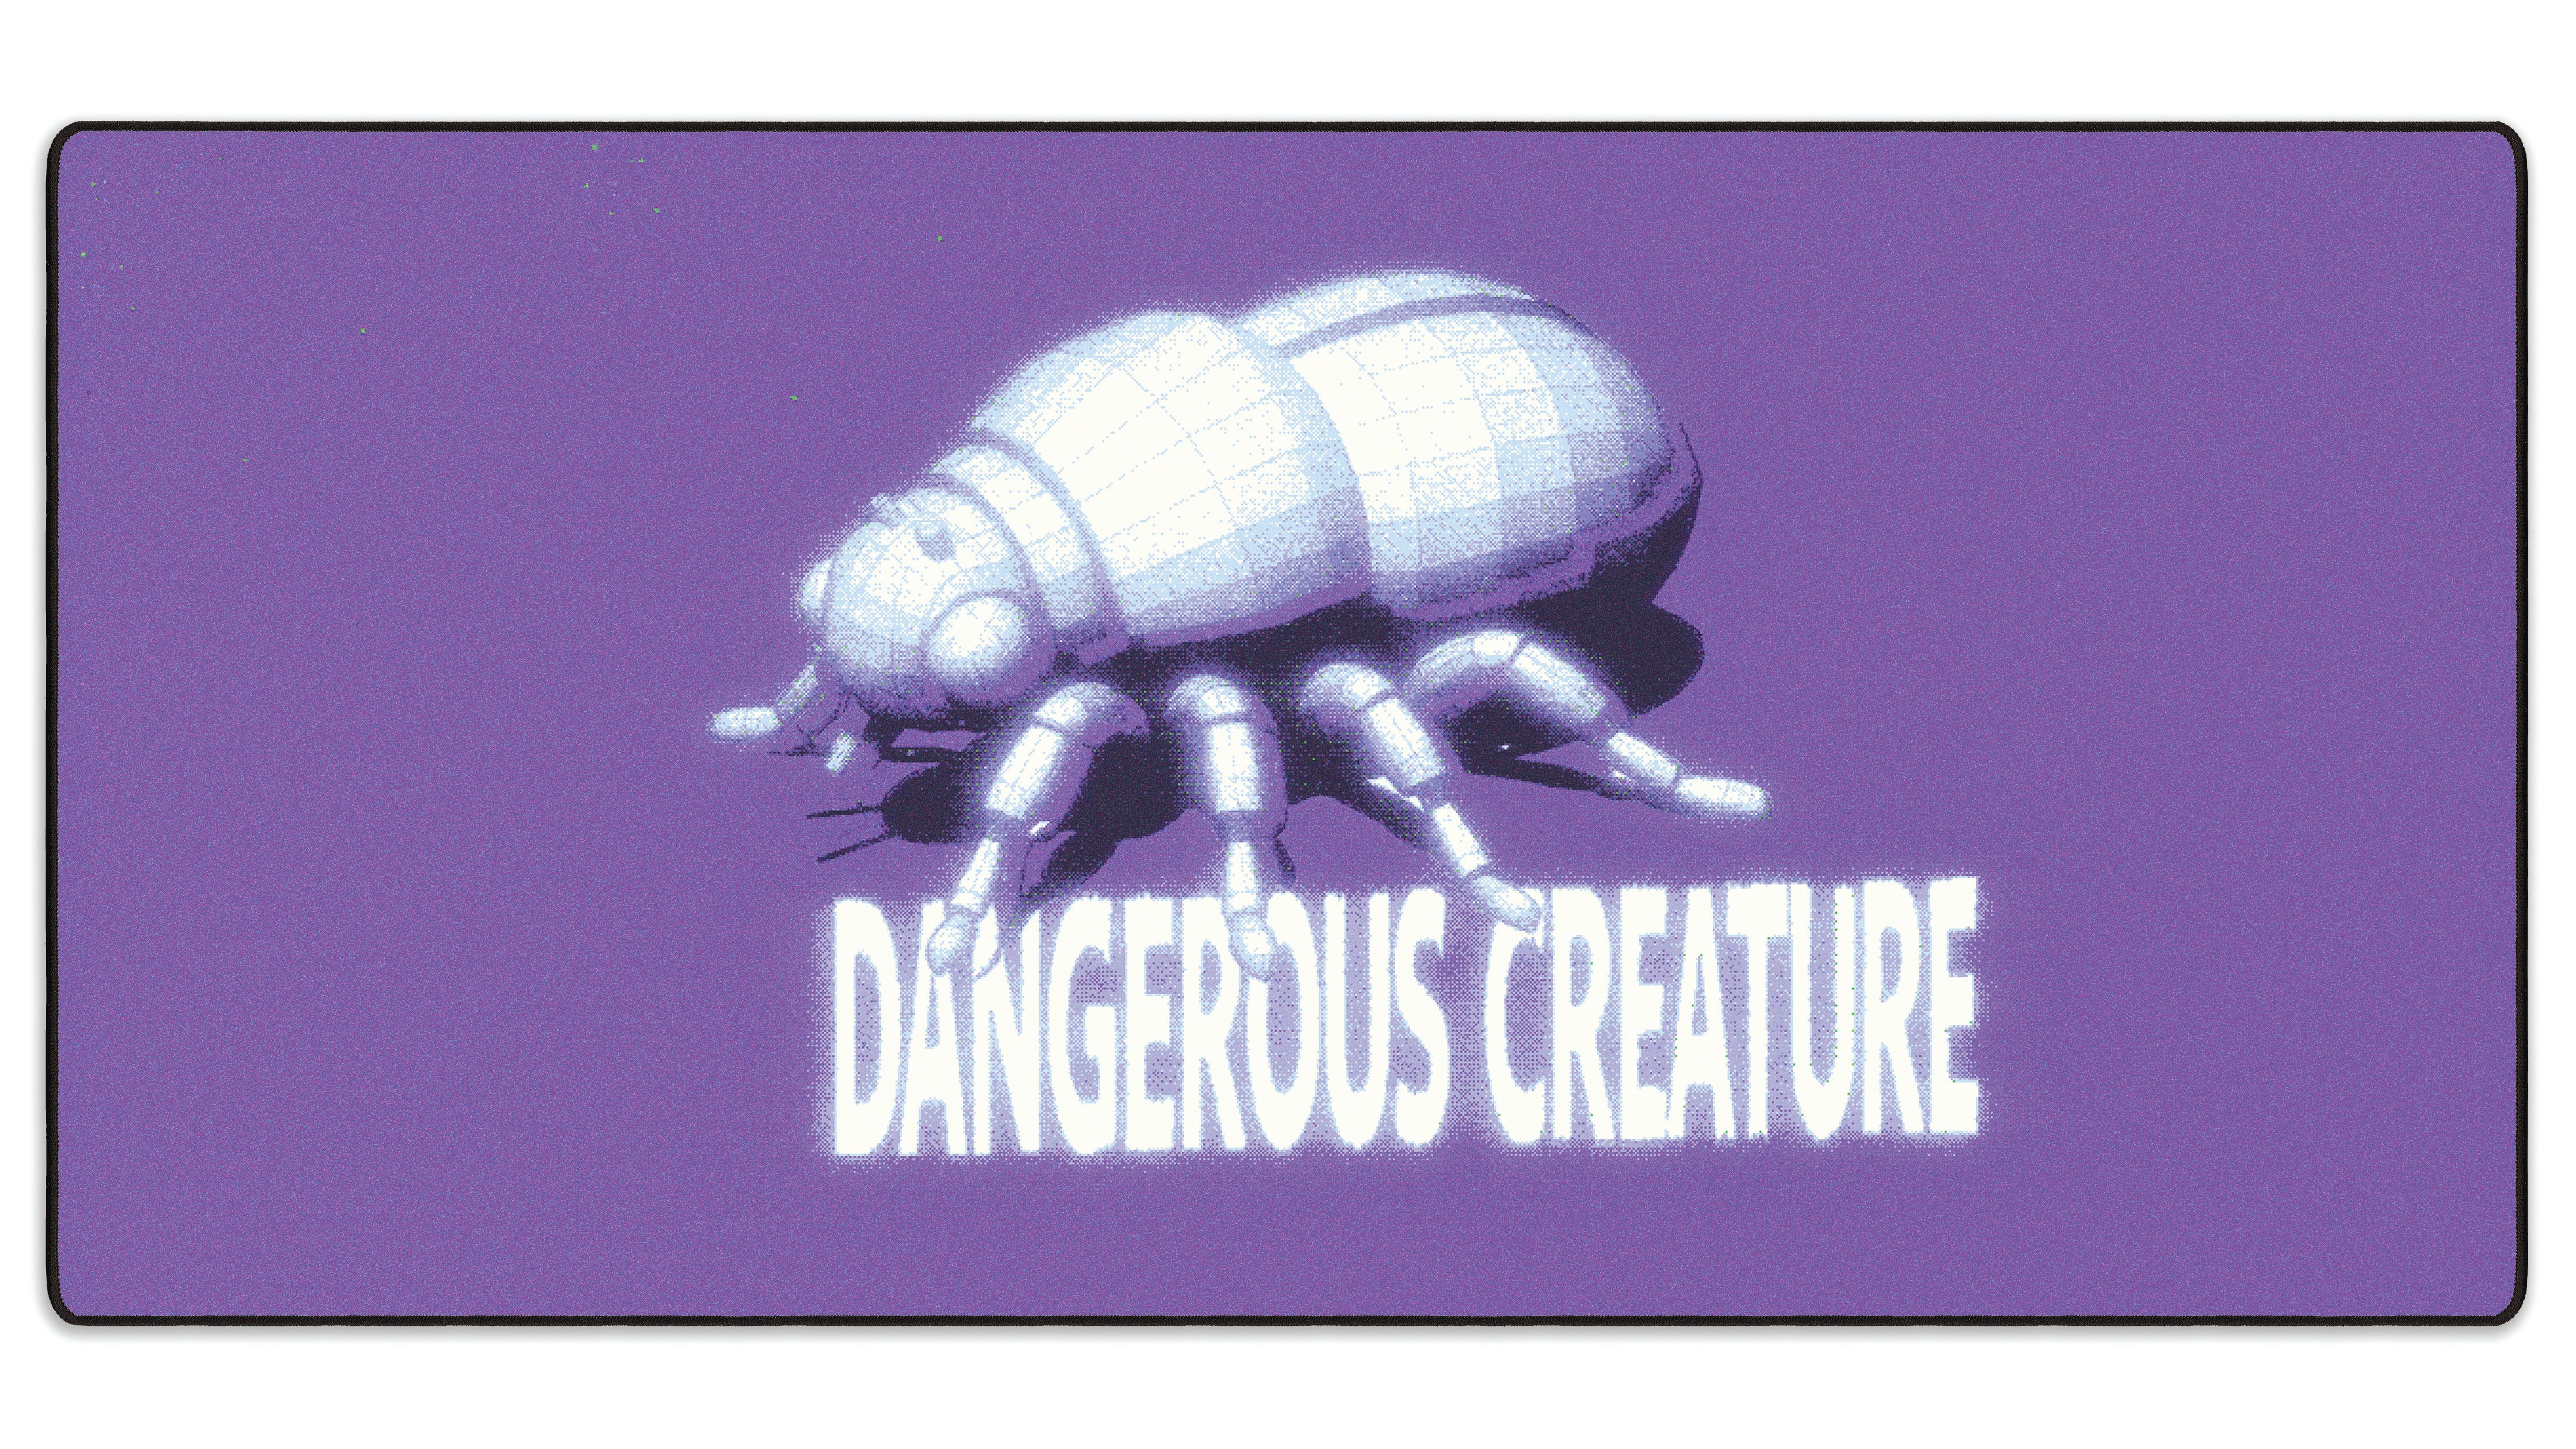 Dangerous Creature, by Dogecore - The Mousepad Company